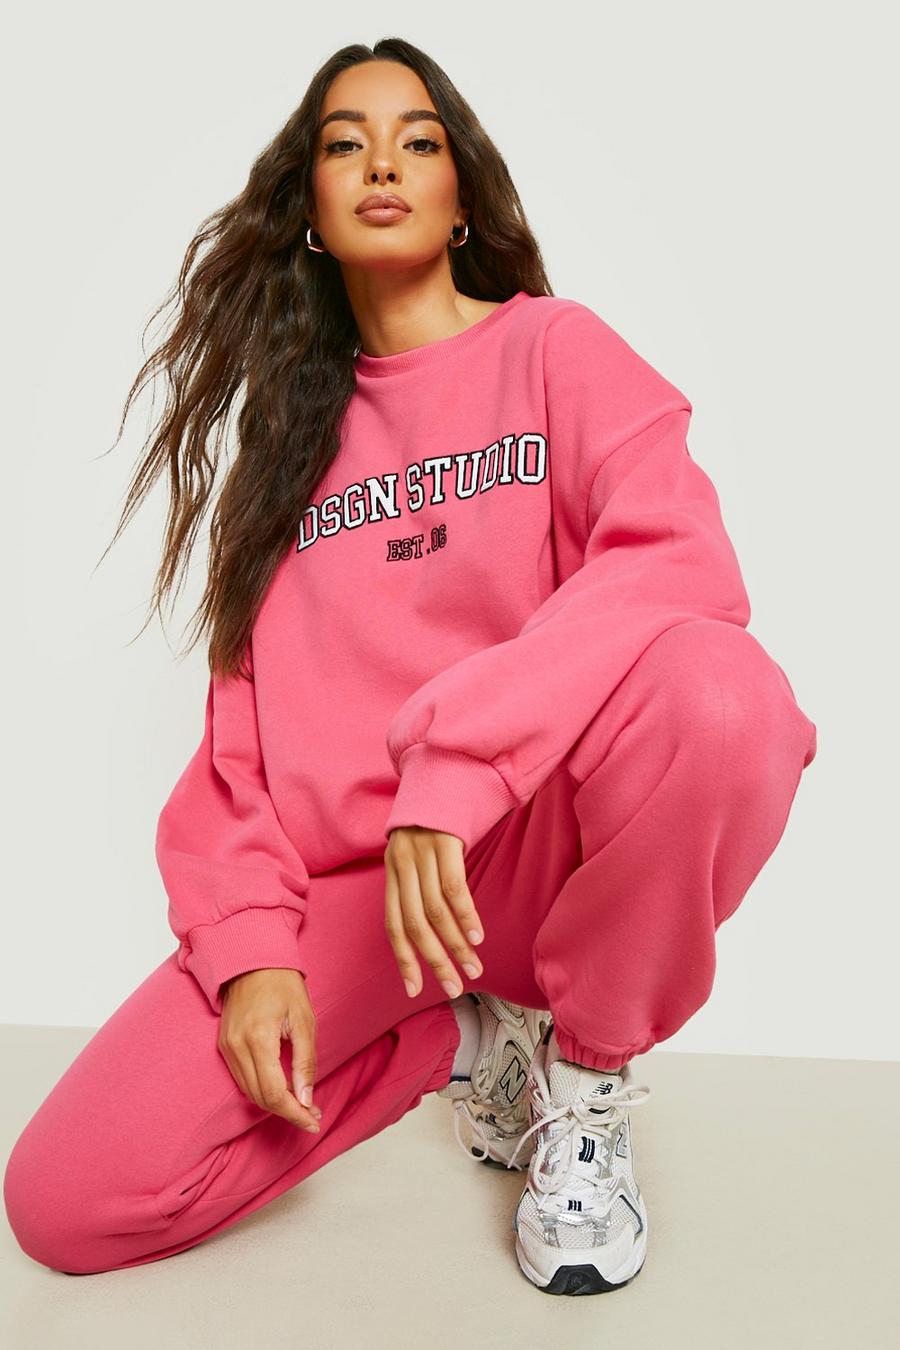 Hot pink Dsgn Studio Applique Sweater Tracksuit